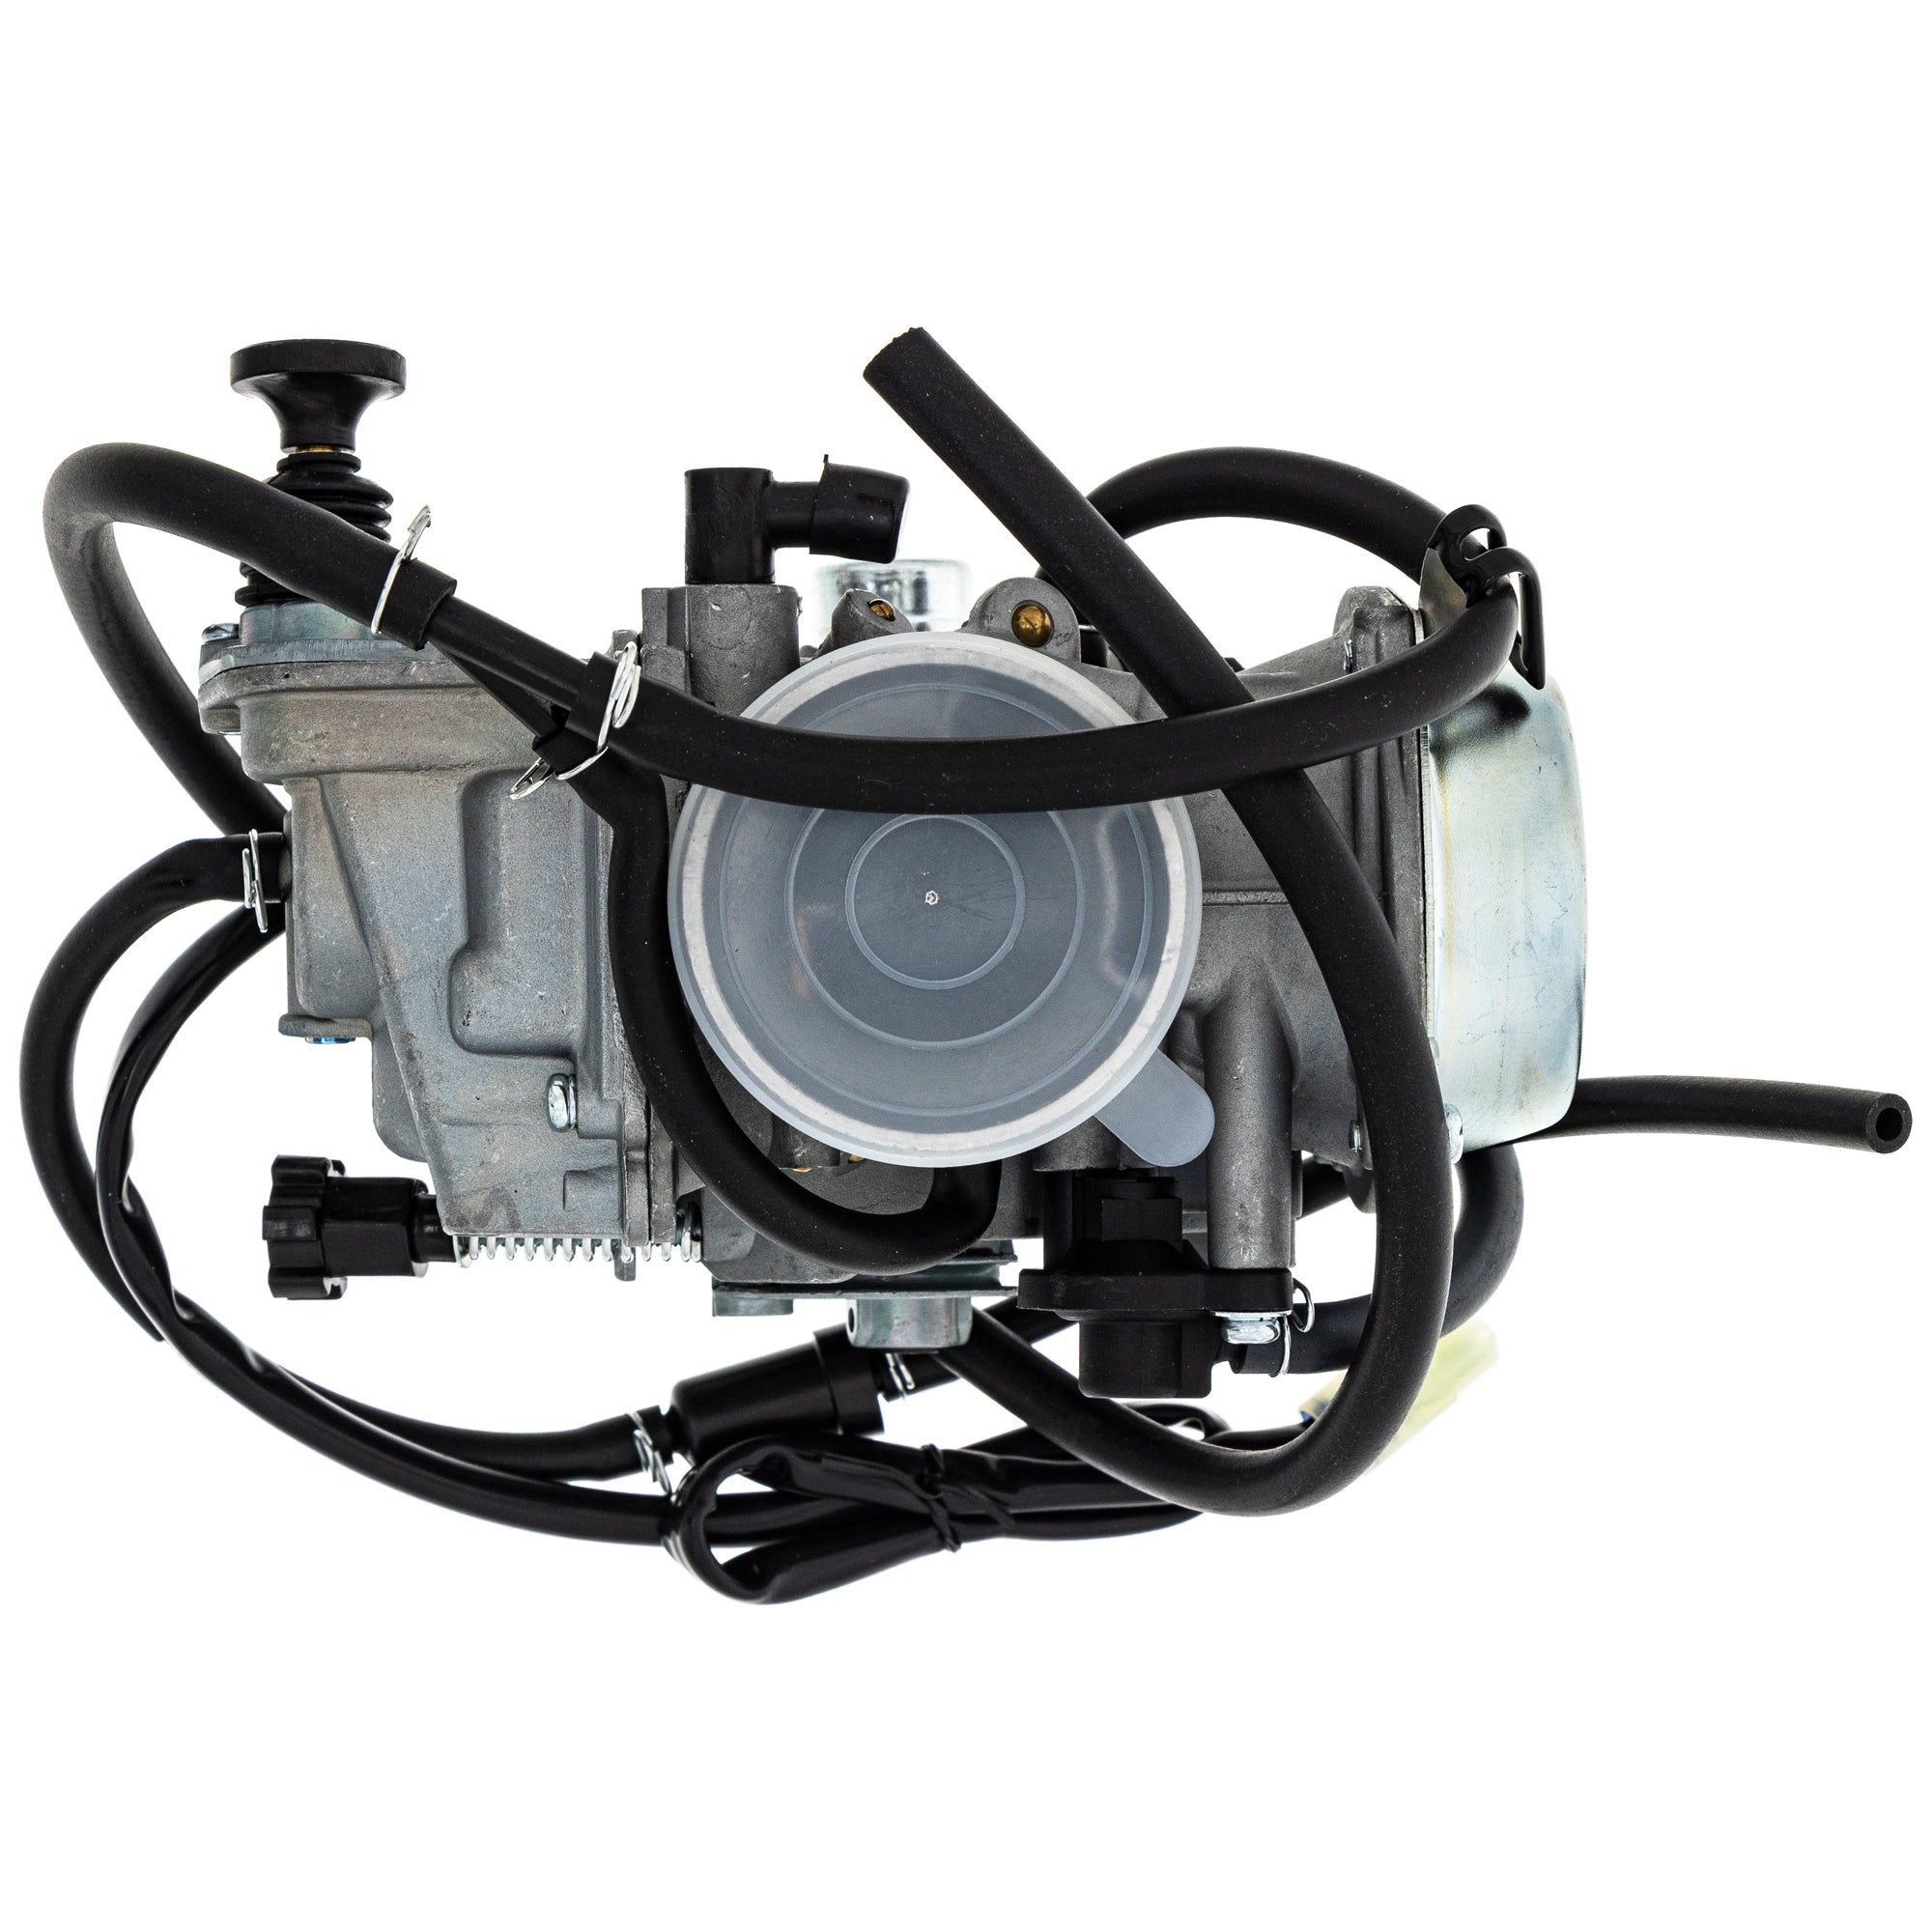 Carburetor for Honda Rancher 350 TRX350FE 16100-HN5-M41 ATV